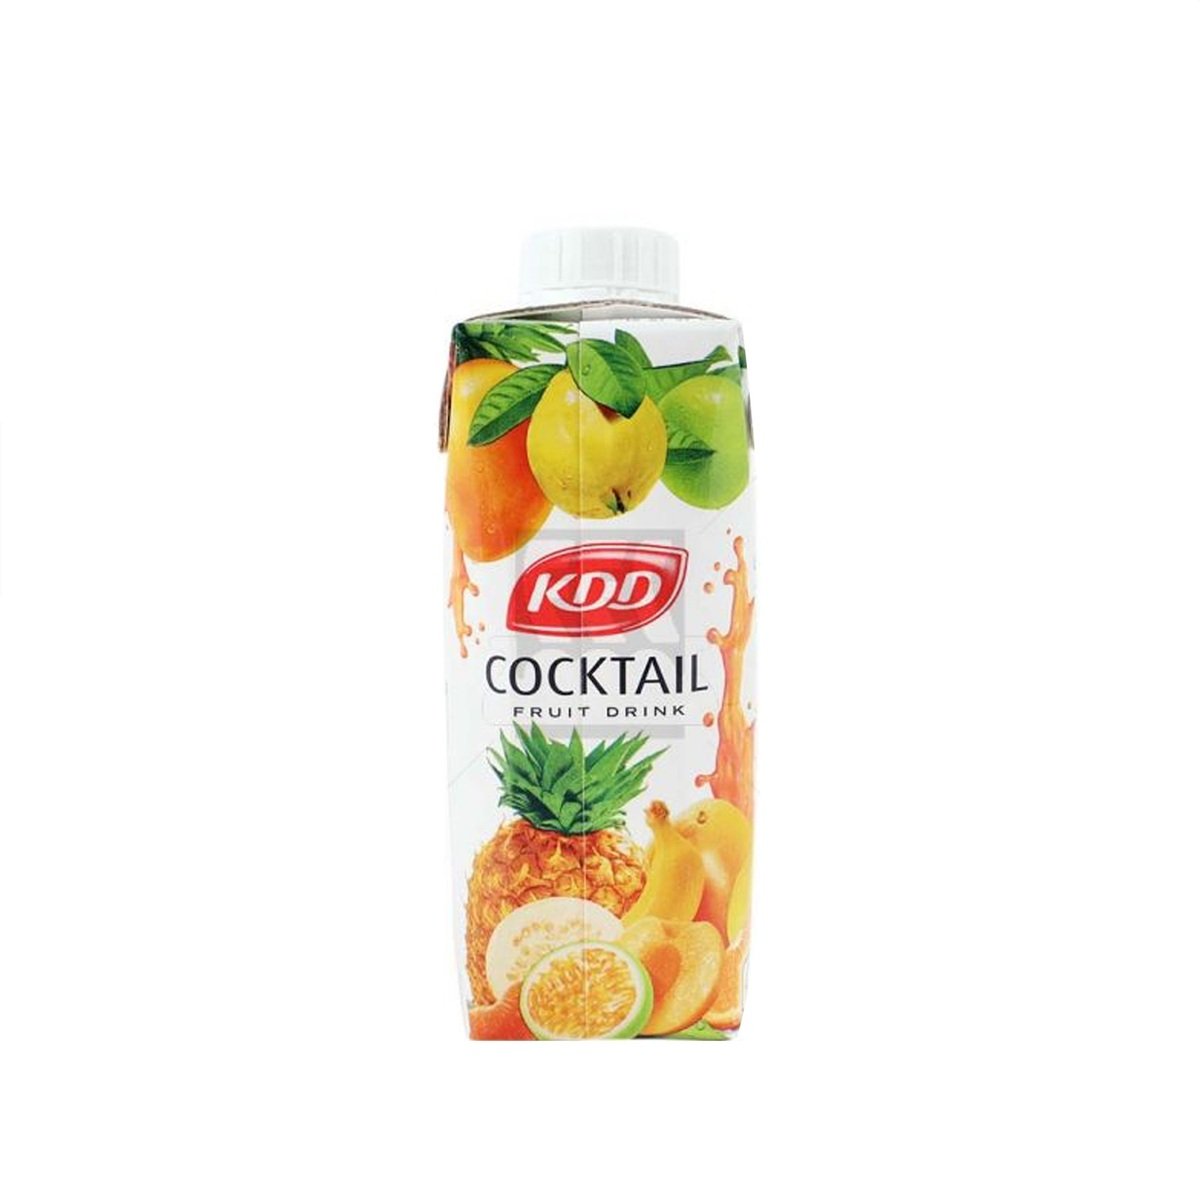 KDD Cocktail Fruit Drink 6 x 250ml